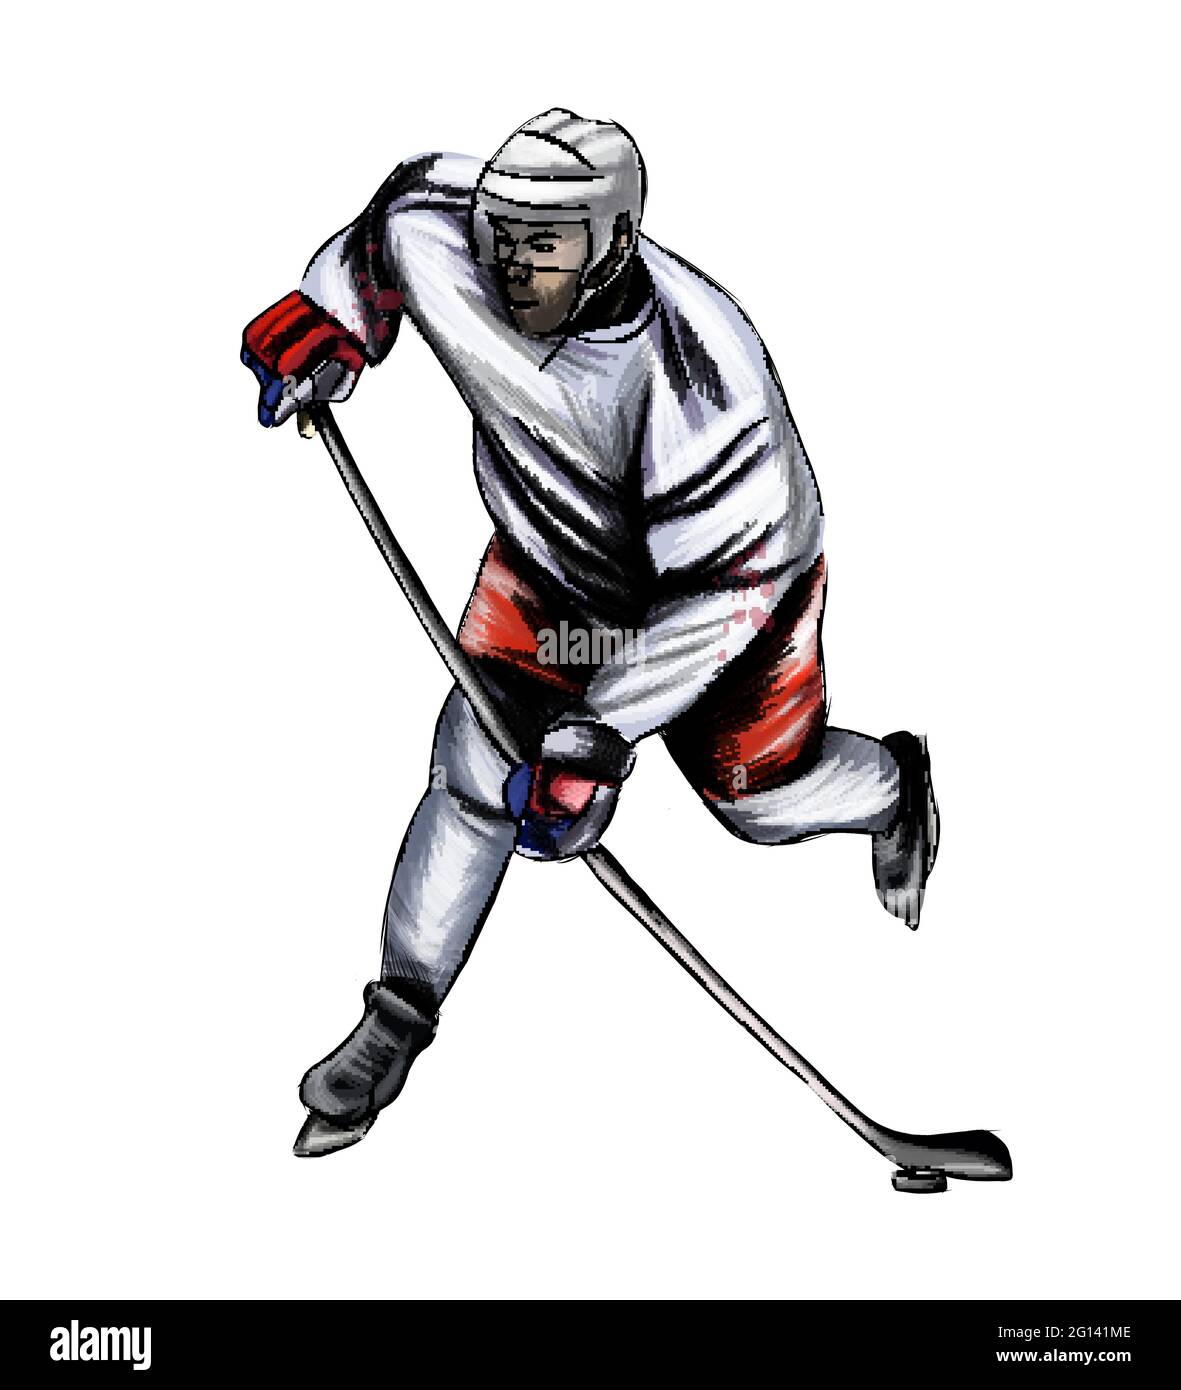 Share 161+ hockey player sketch